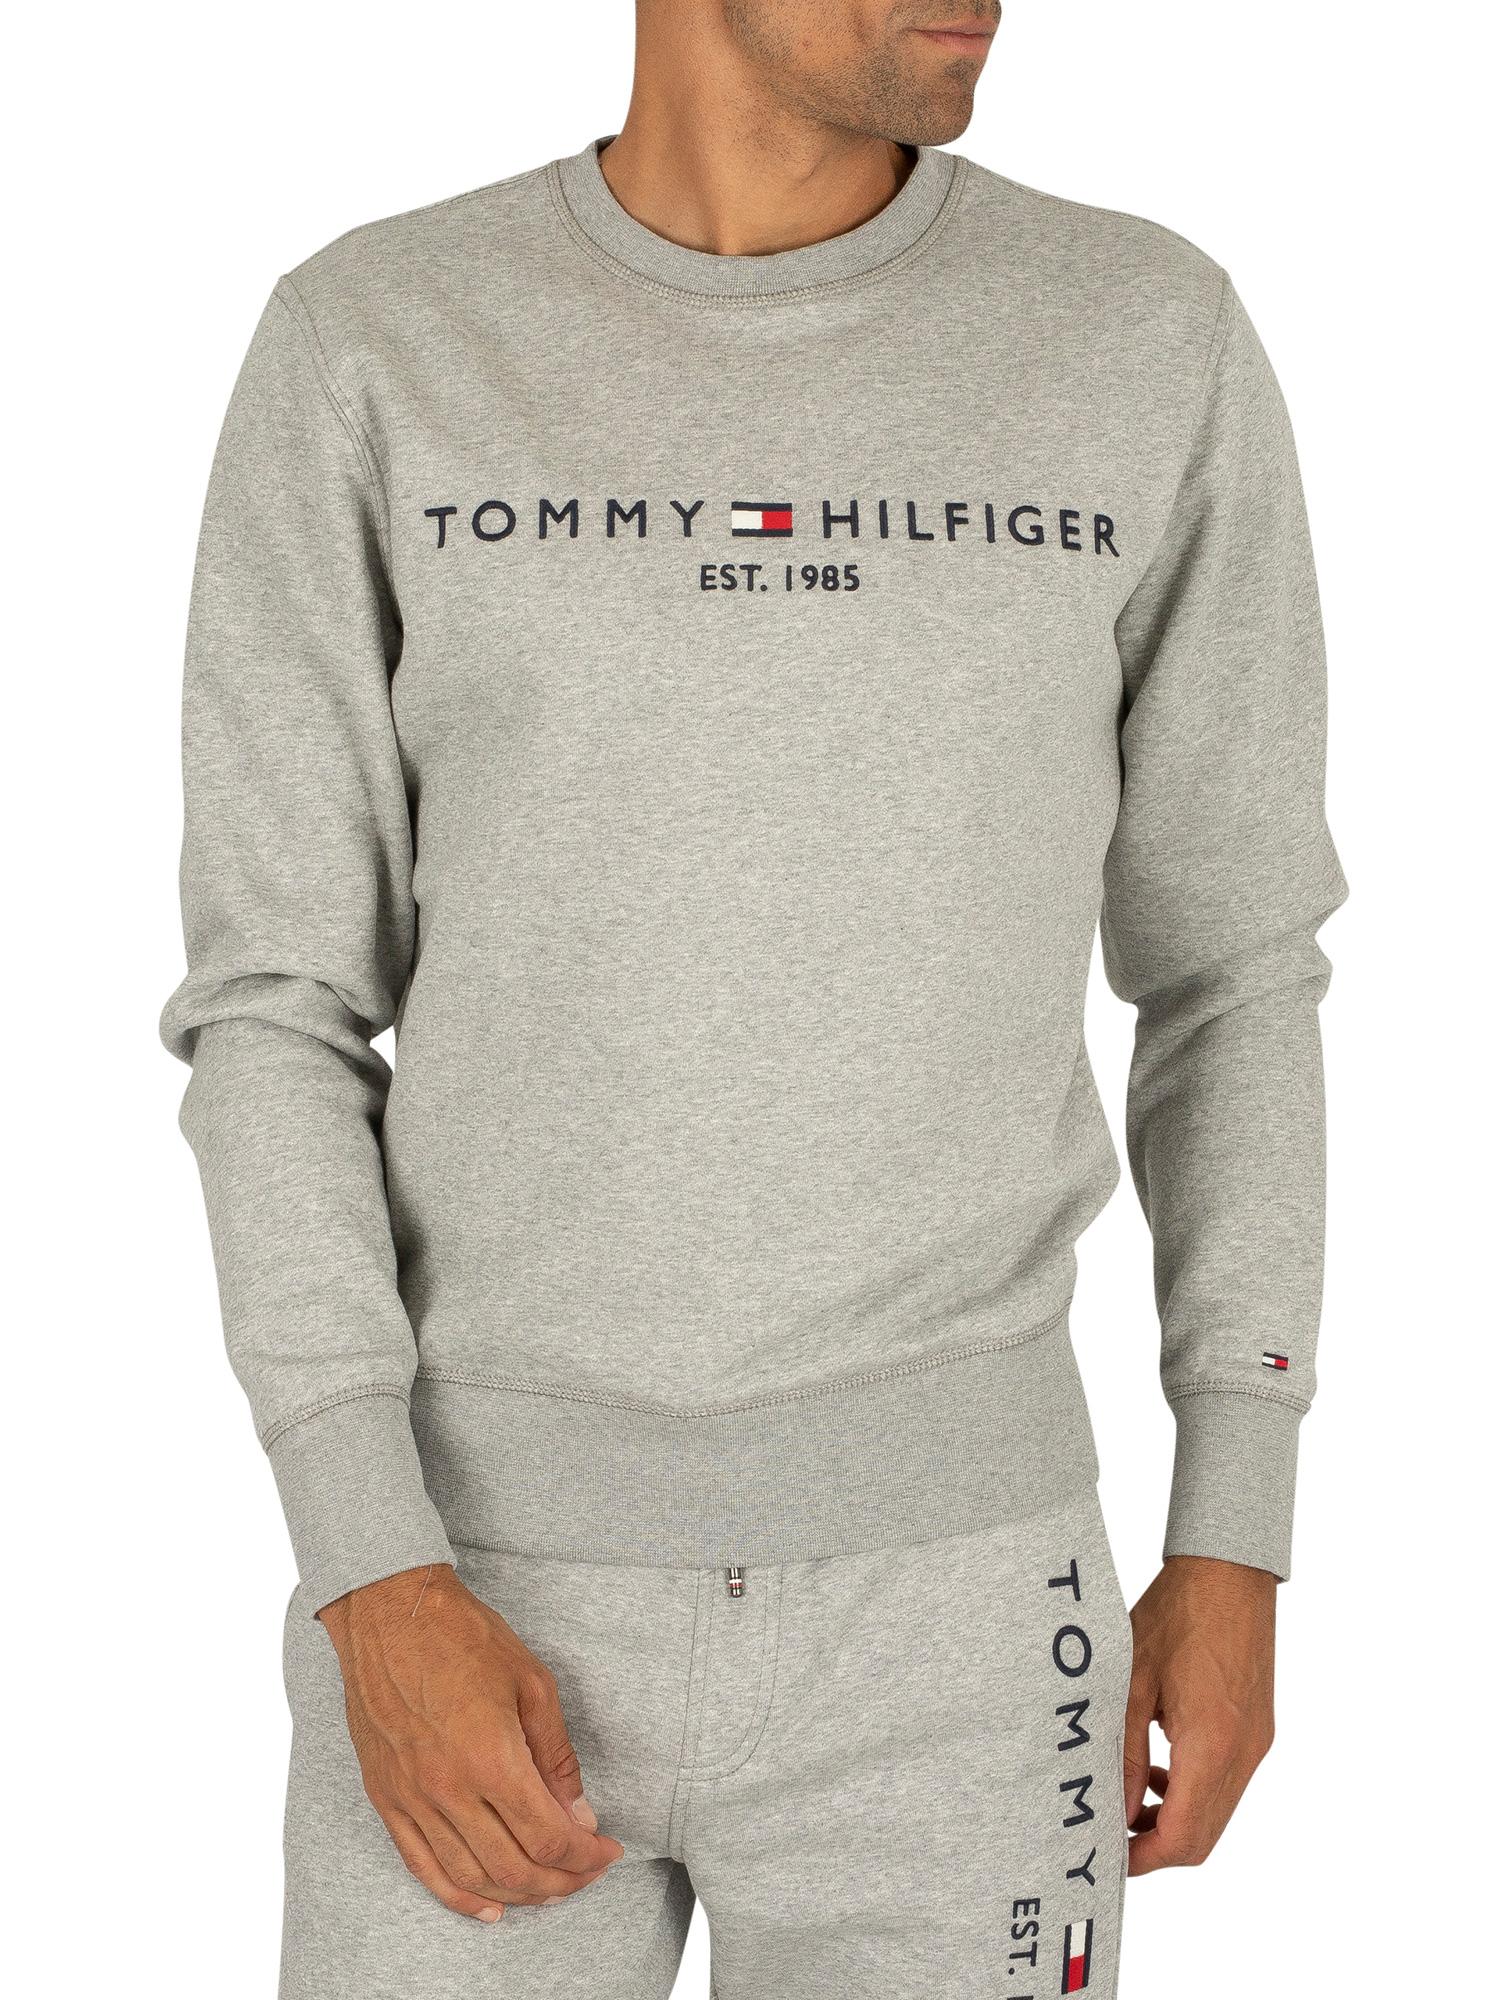 Angreb Merchandiser Mig selv Tommy Hilfiger Cotton Logo Sweatshirt in Cloud Heather (Gray) for Men - Lyst